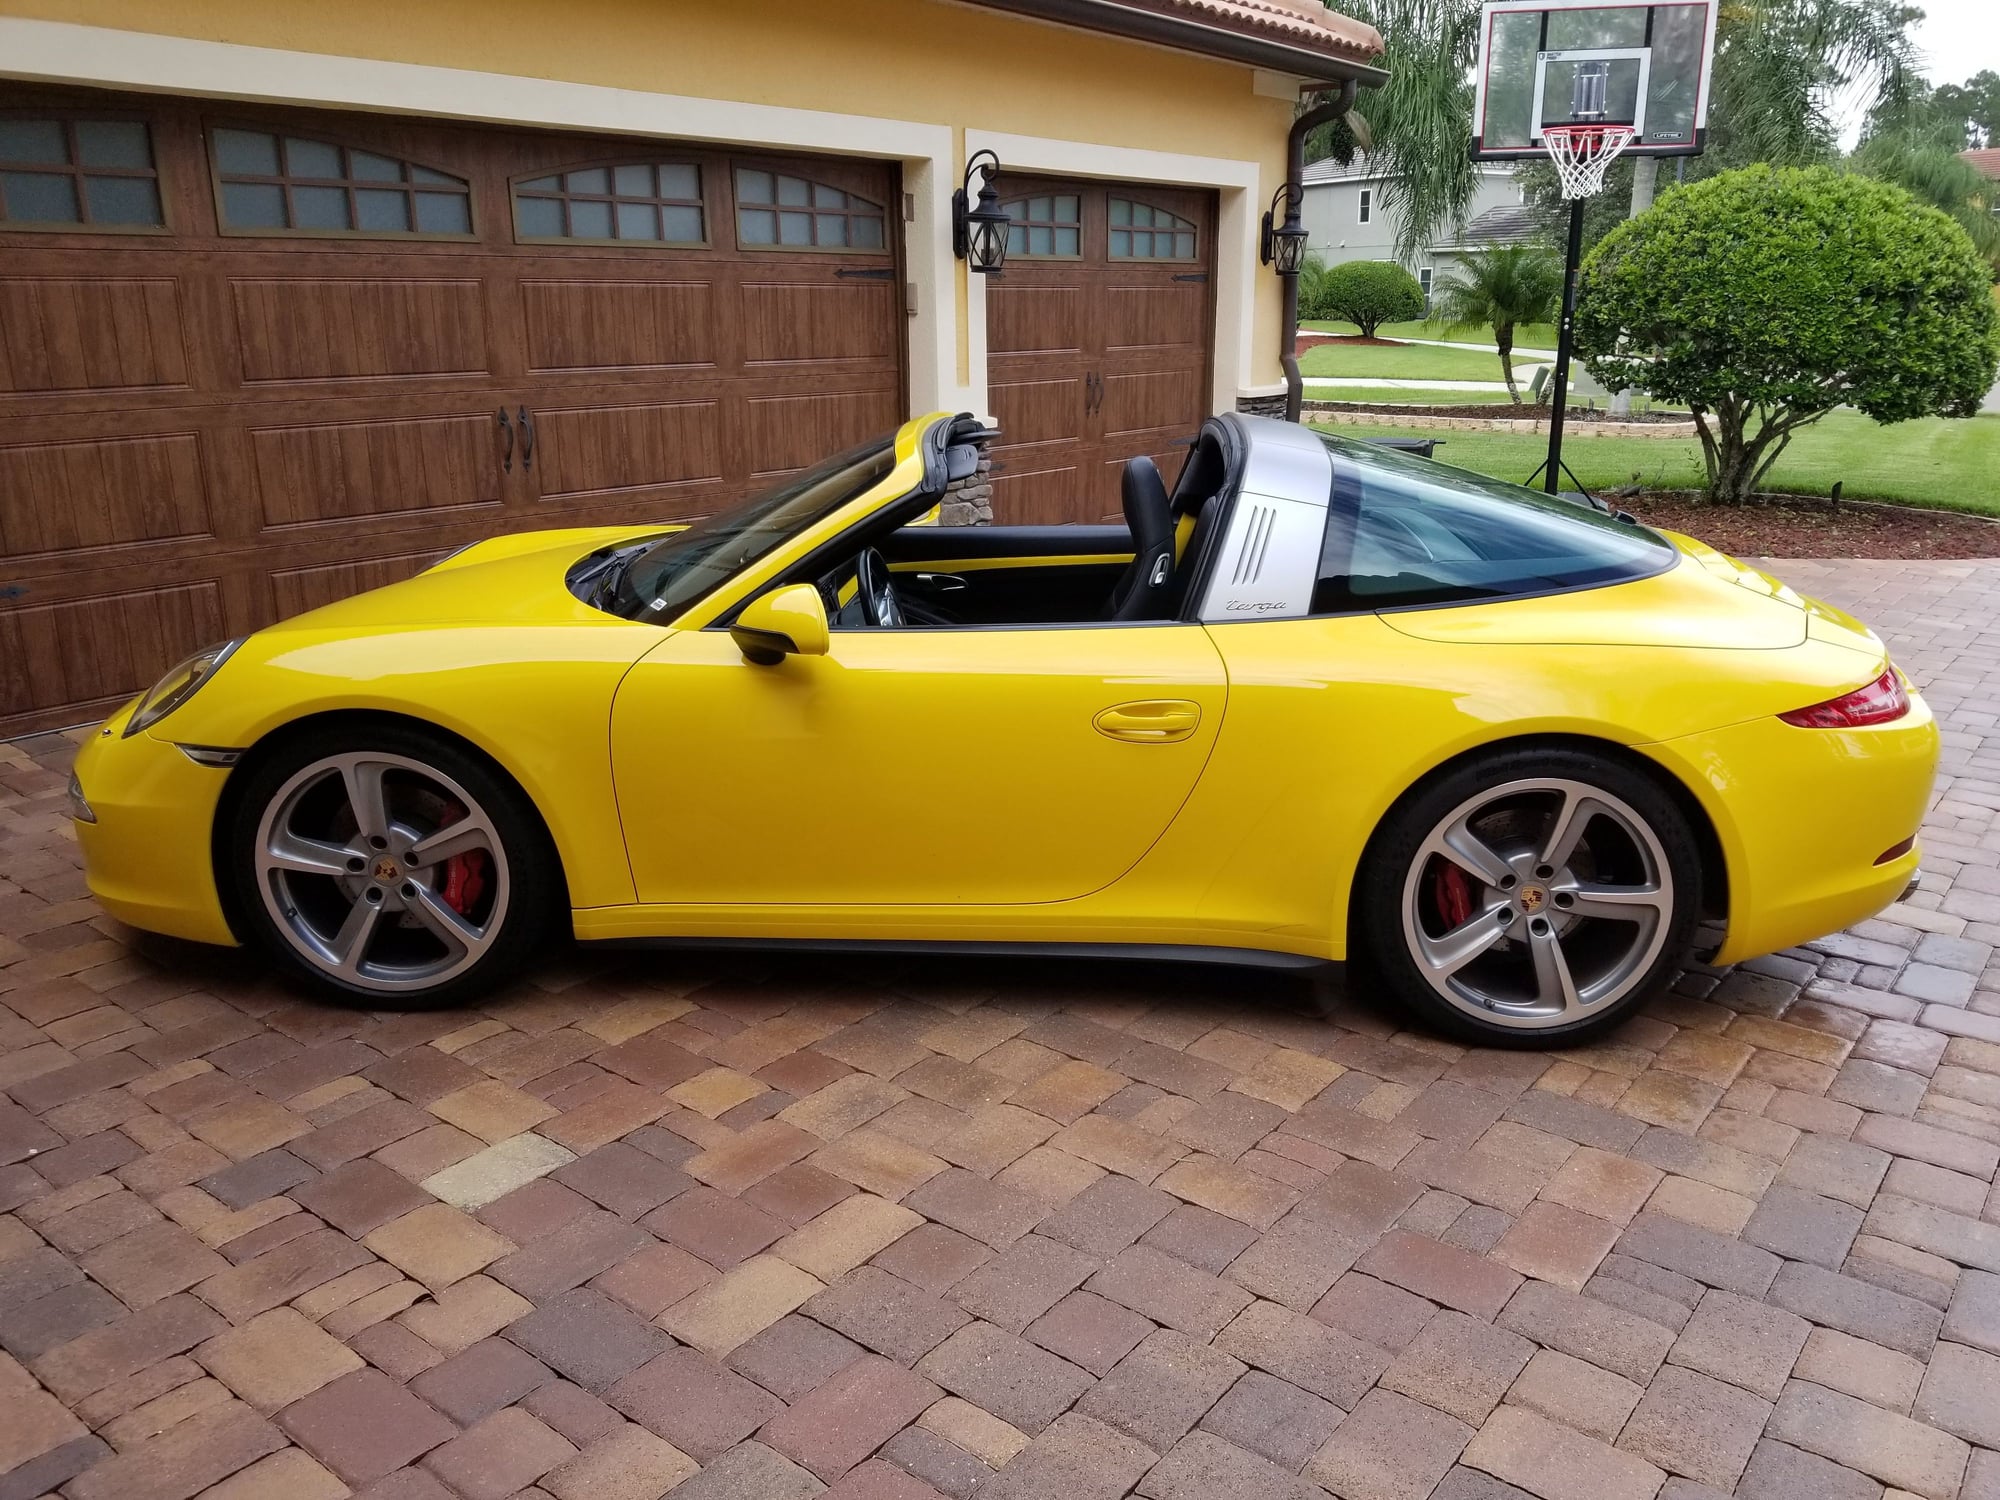 2014 Porsche 911 - 2014 Porsche 991.1 Targa 37k miles PDK - Used - VIN WP0BB2A95ES133246 - 37,215 Miles - 6 cyl - AWD - Automatic - Convertible - Yellow - Orlando, FL 32746, United States